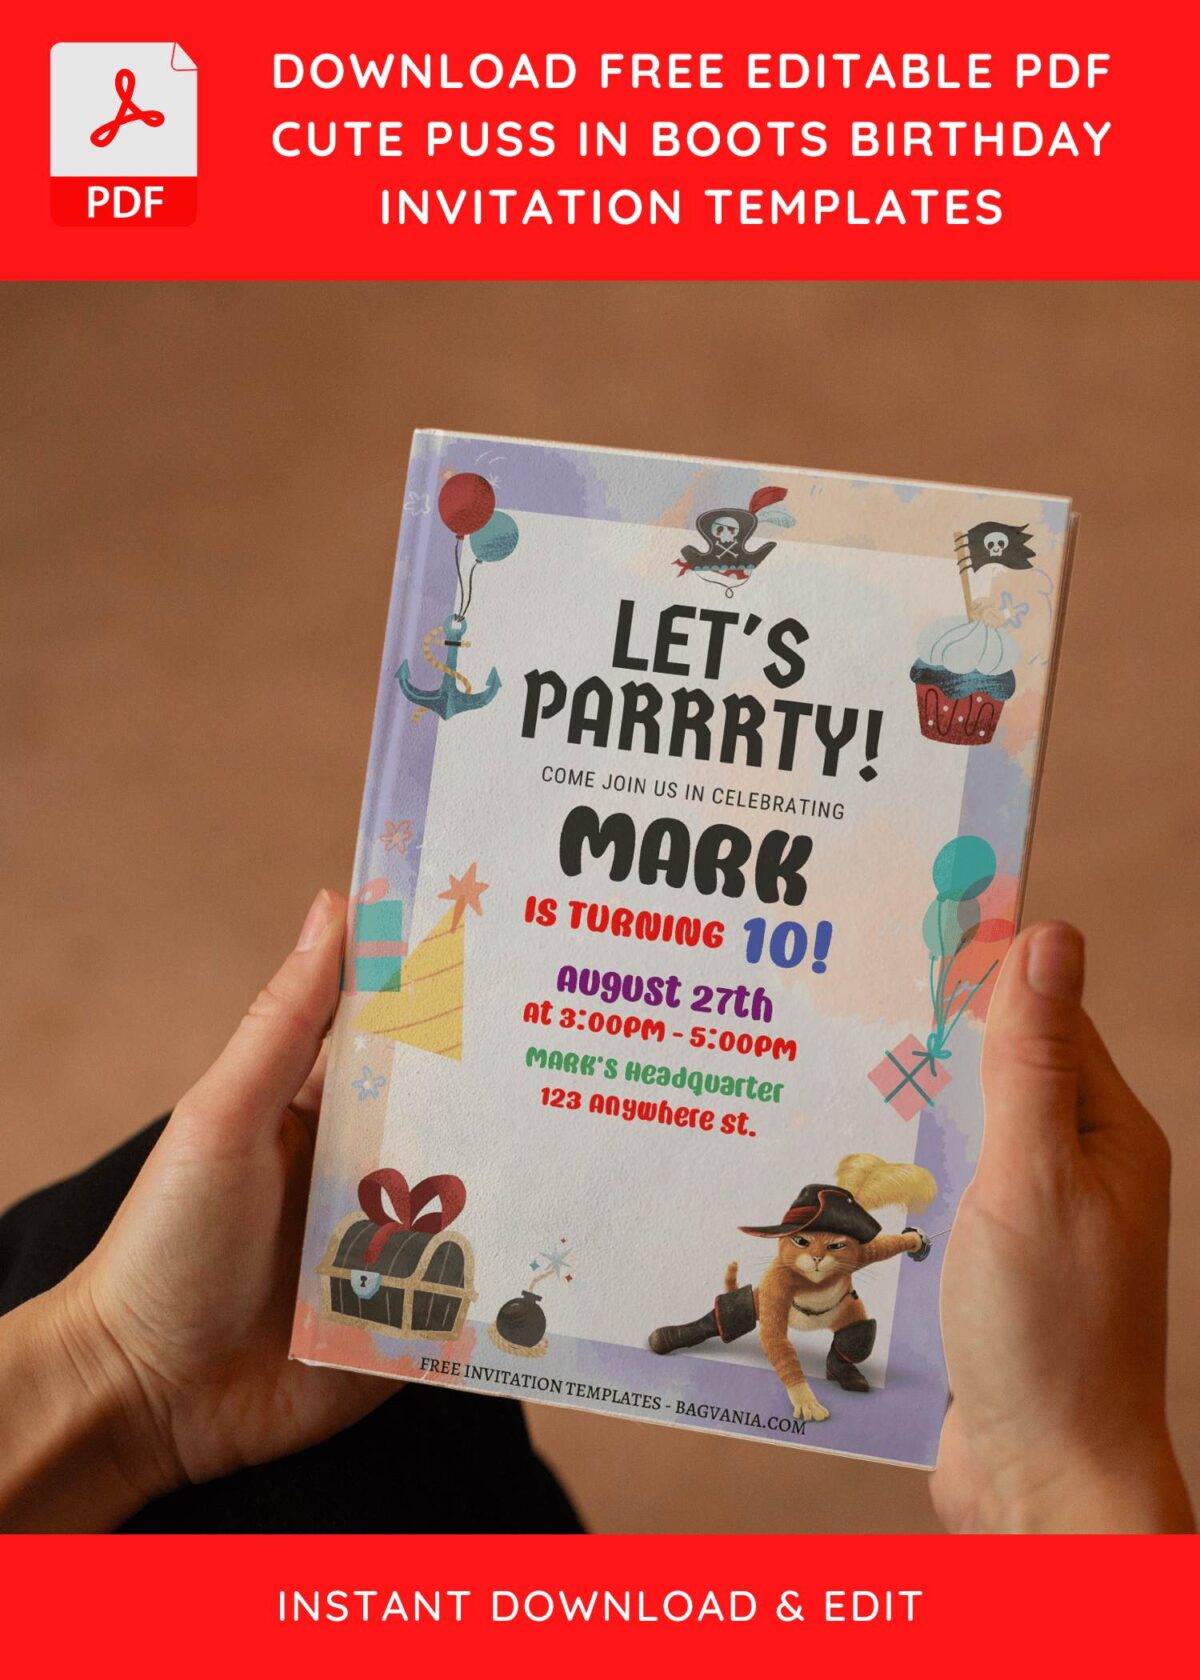 (Free Editable PDF) Cute Puss In Boots Birthday Invitation Templates E